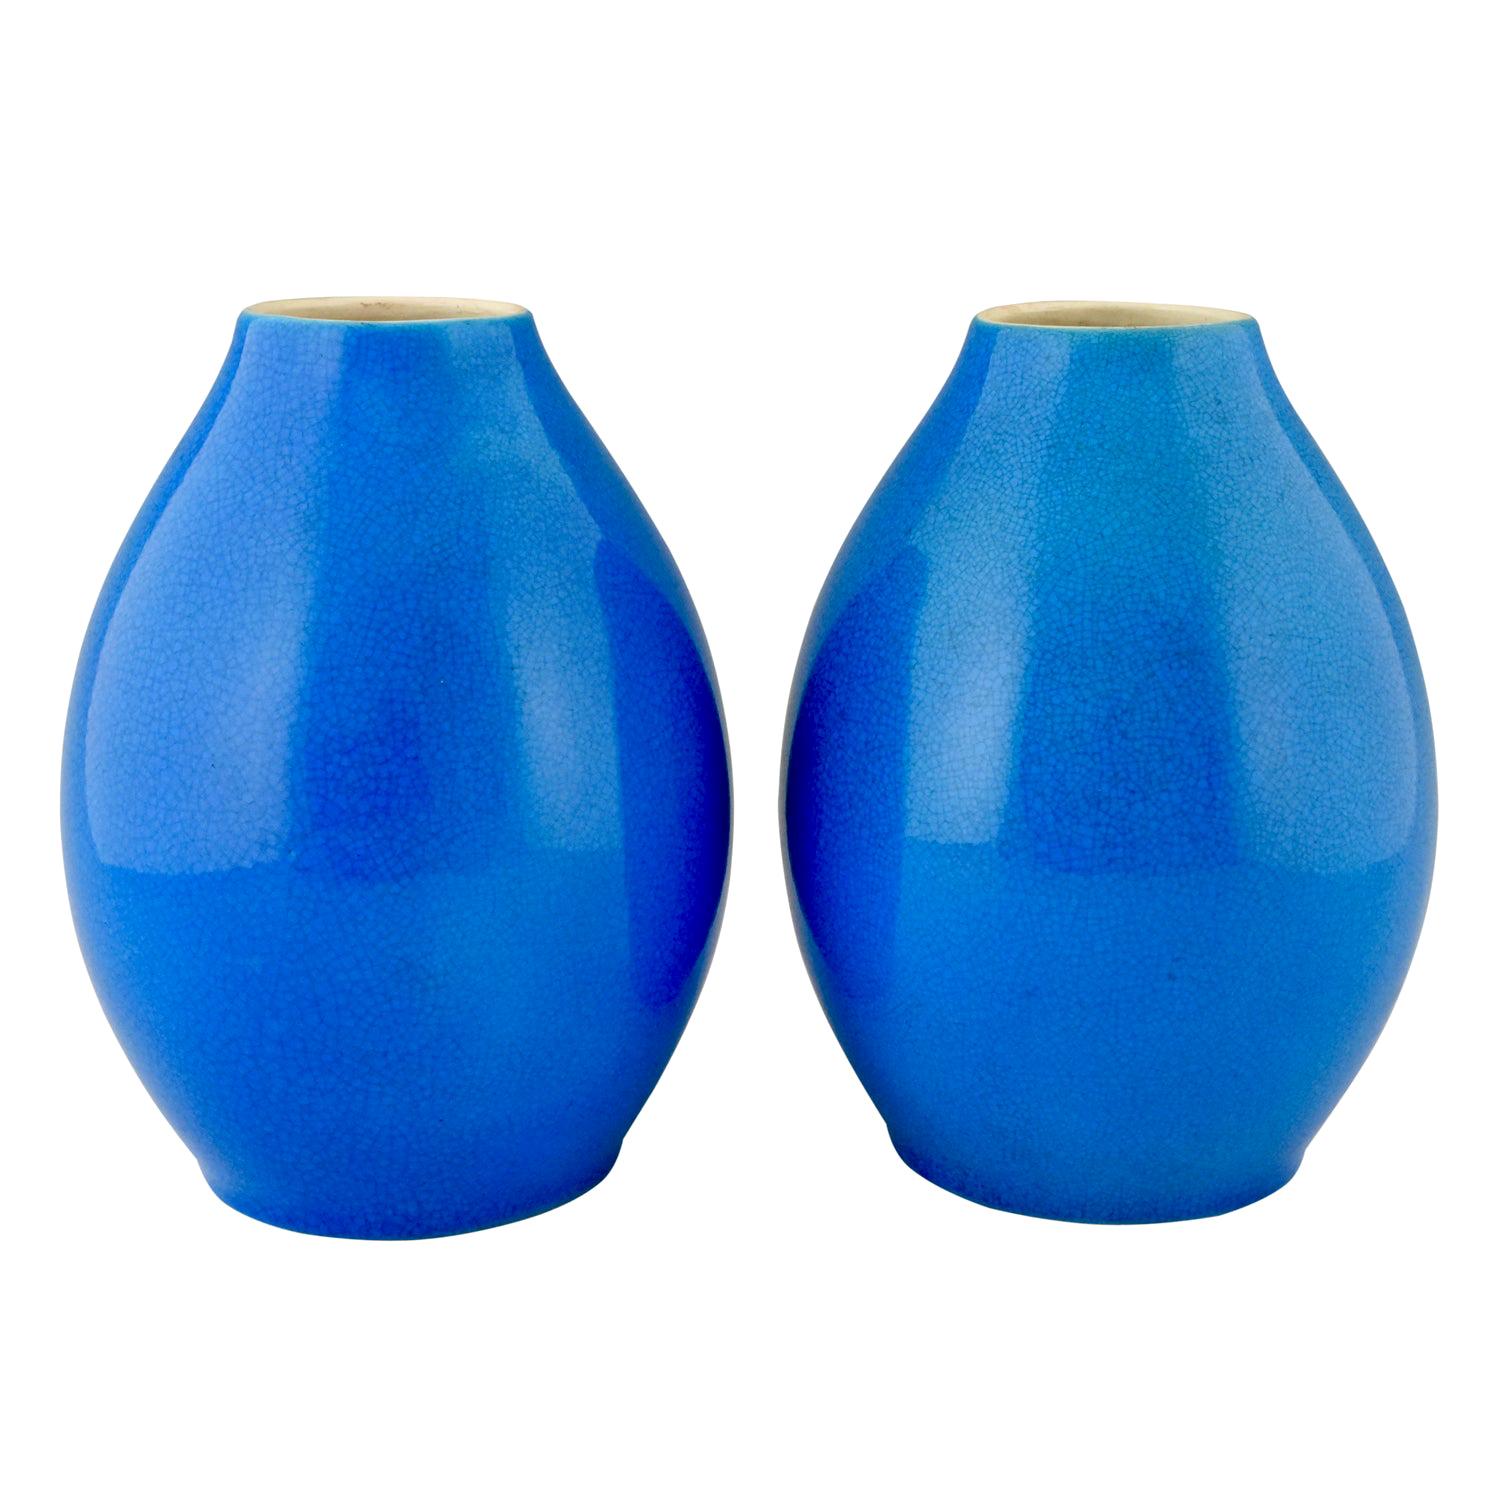 Pair of Art Deco Vases Blue Crackled Ceramic Catteau Boch Freres, 1925